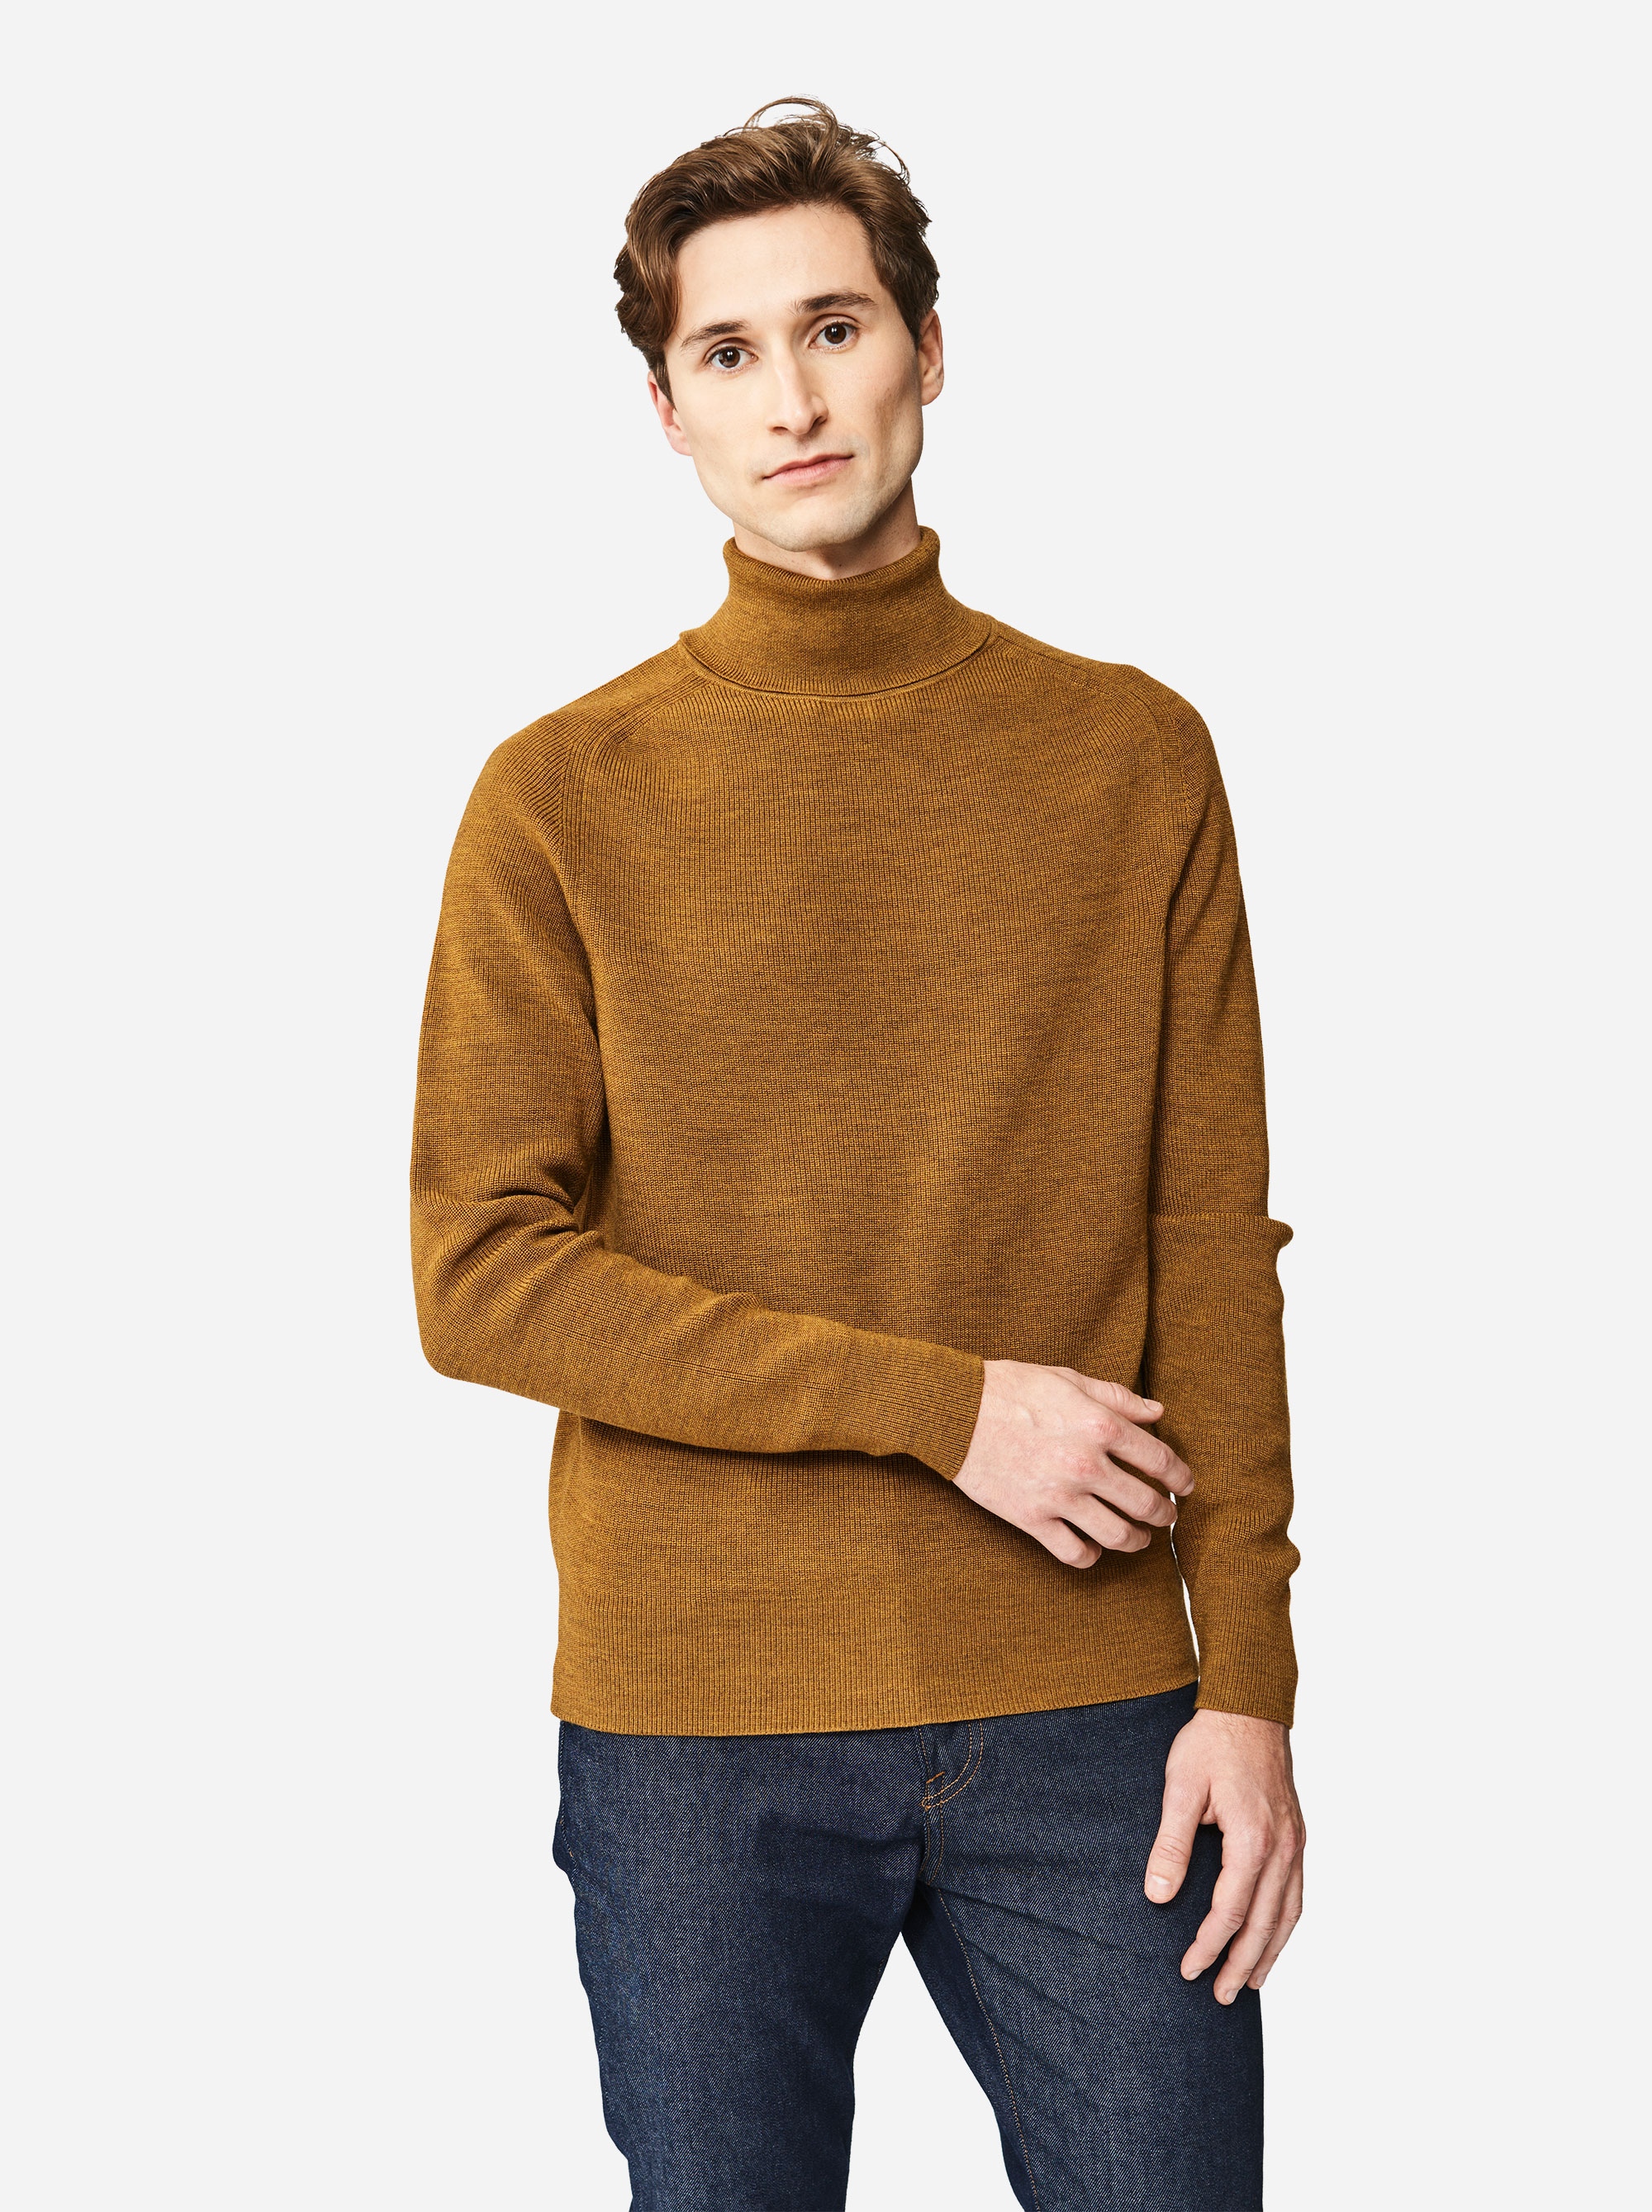 Teym - Turtleneck - The Merino Sweater - Men - Mustard - 1